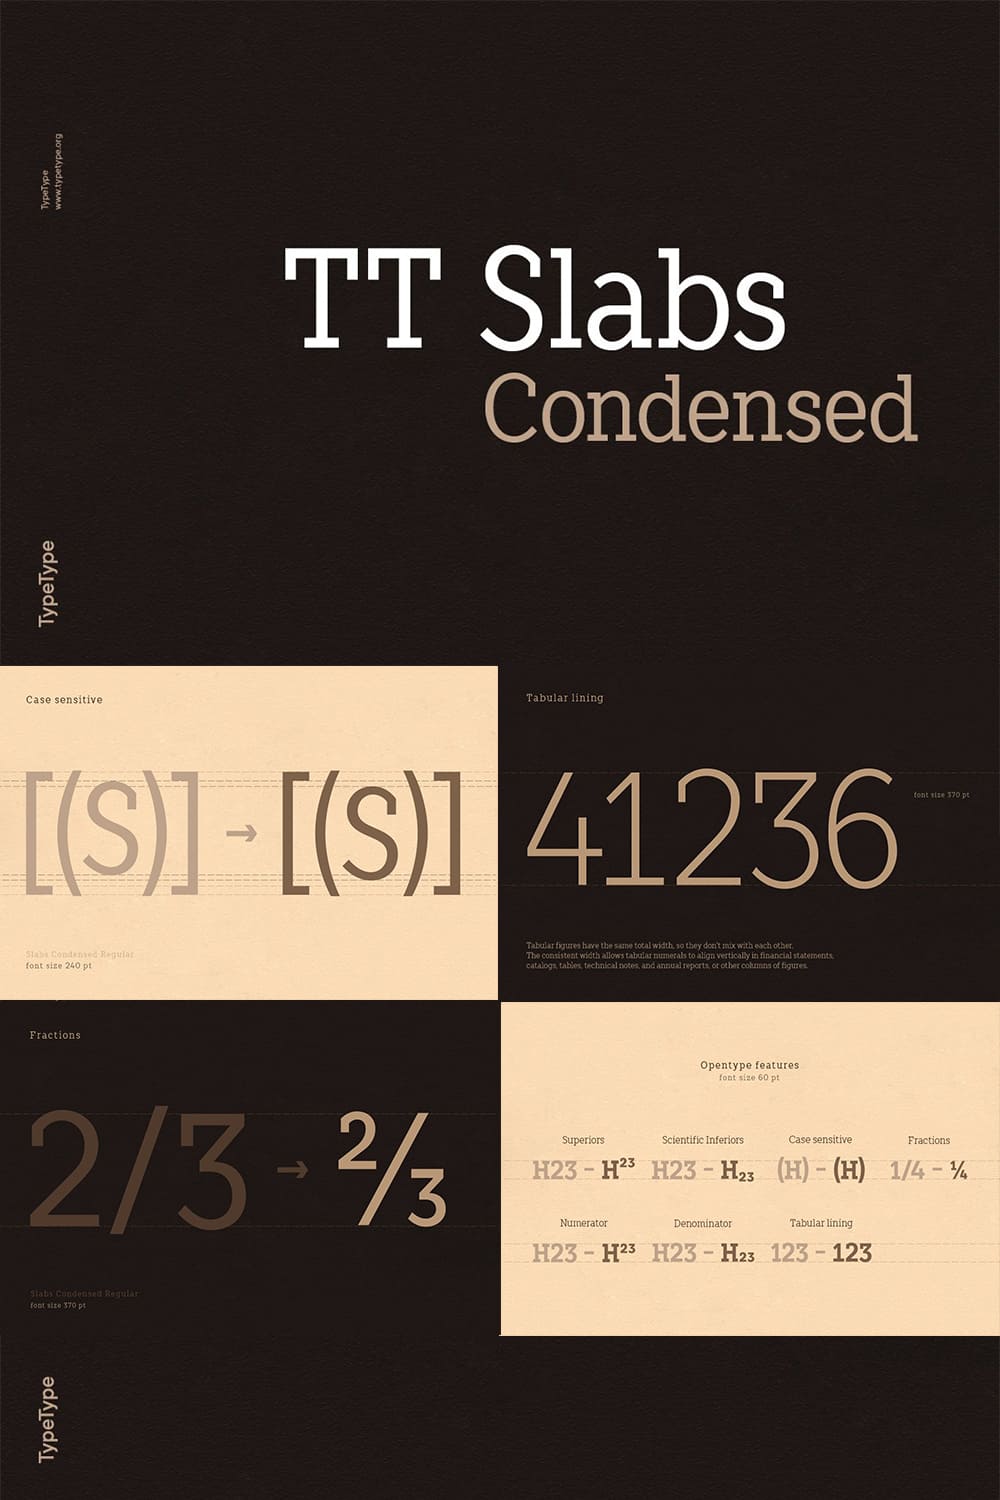 Modern RTT Slabs Condensed font.